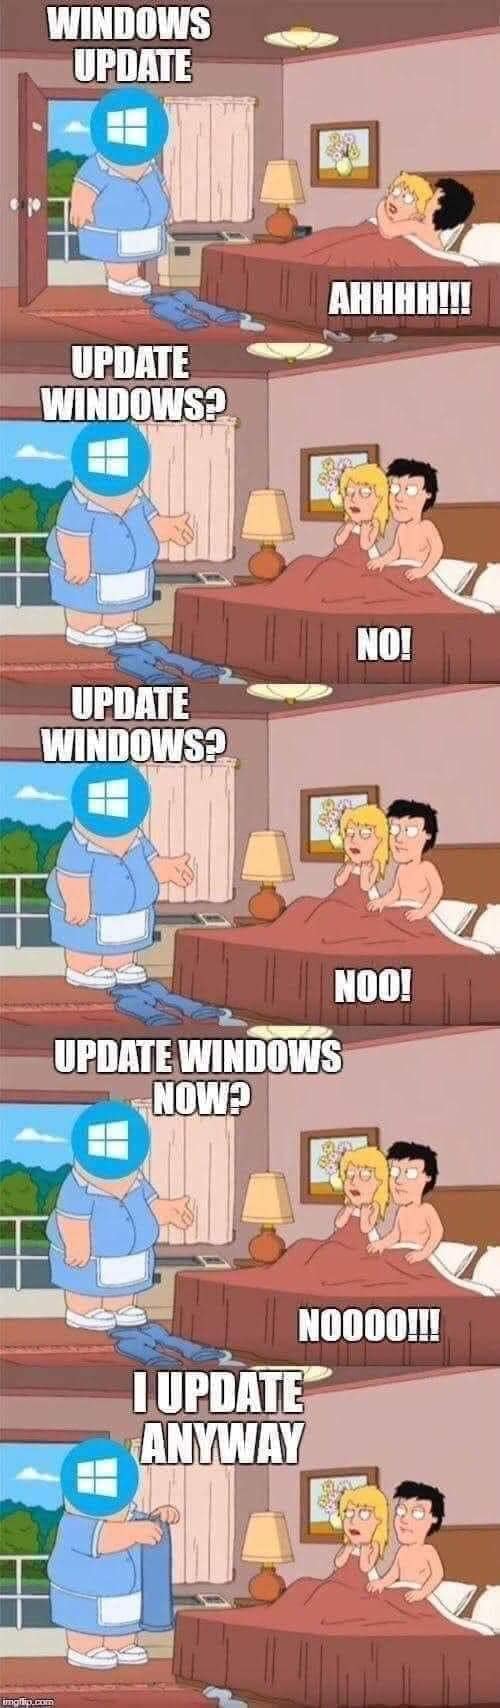 Update windows now?